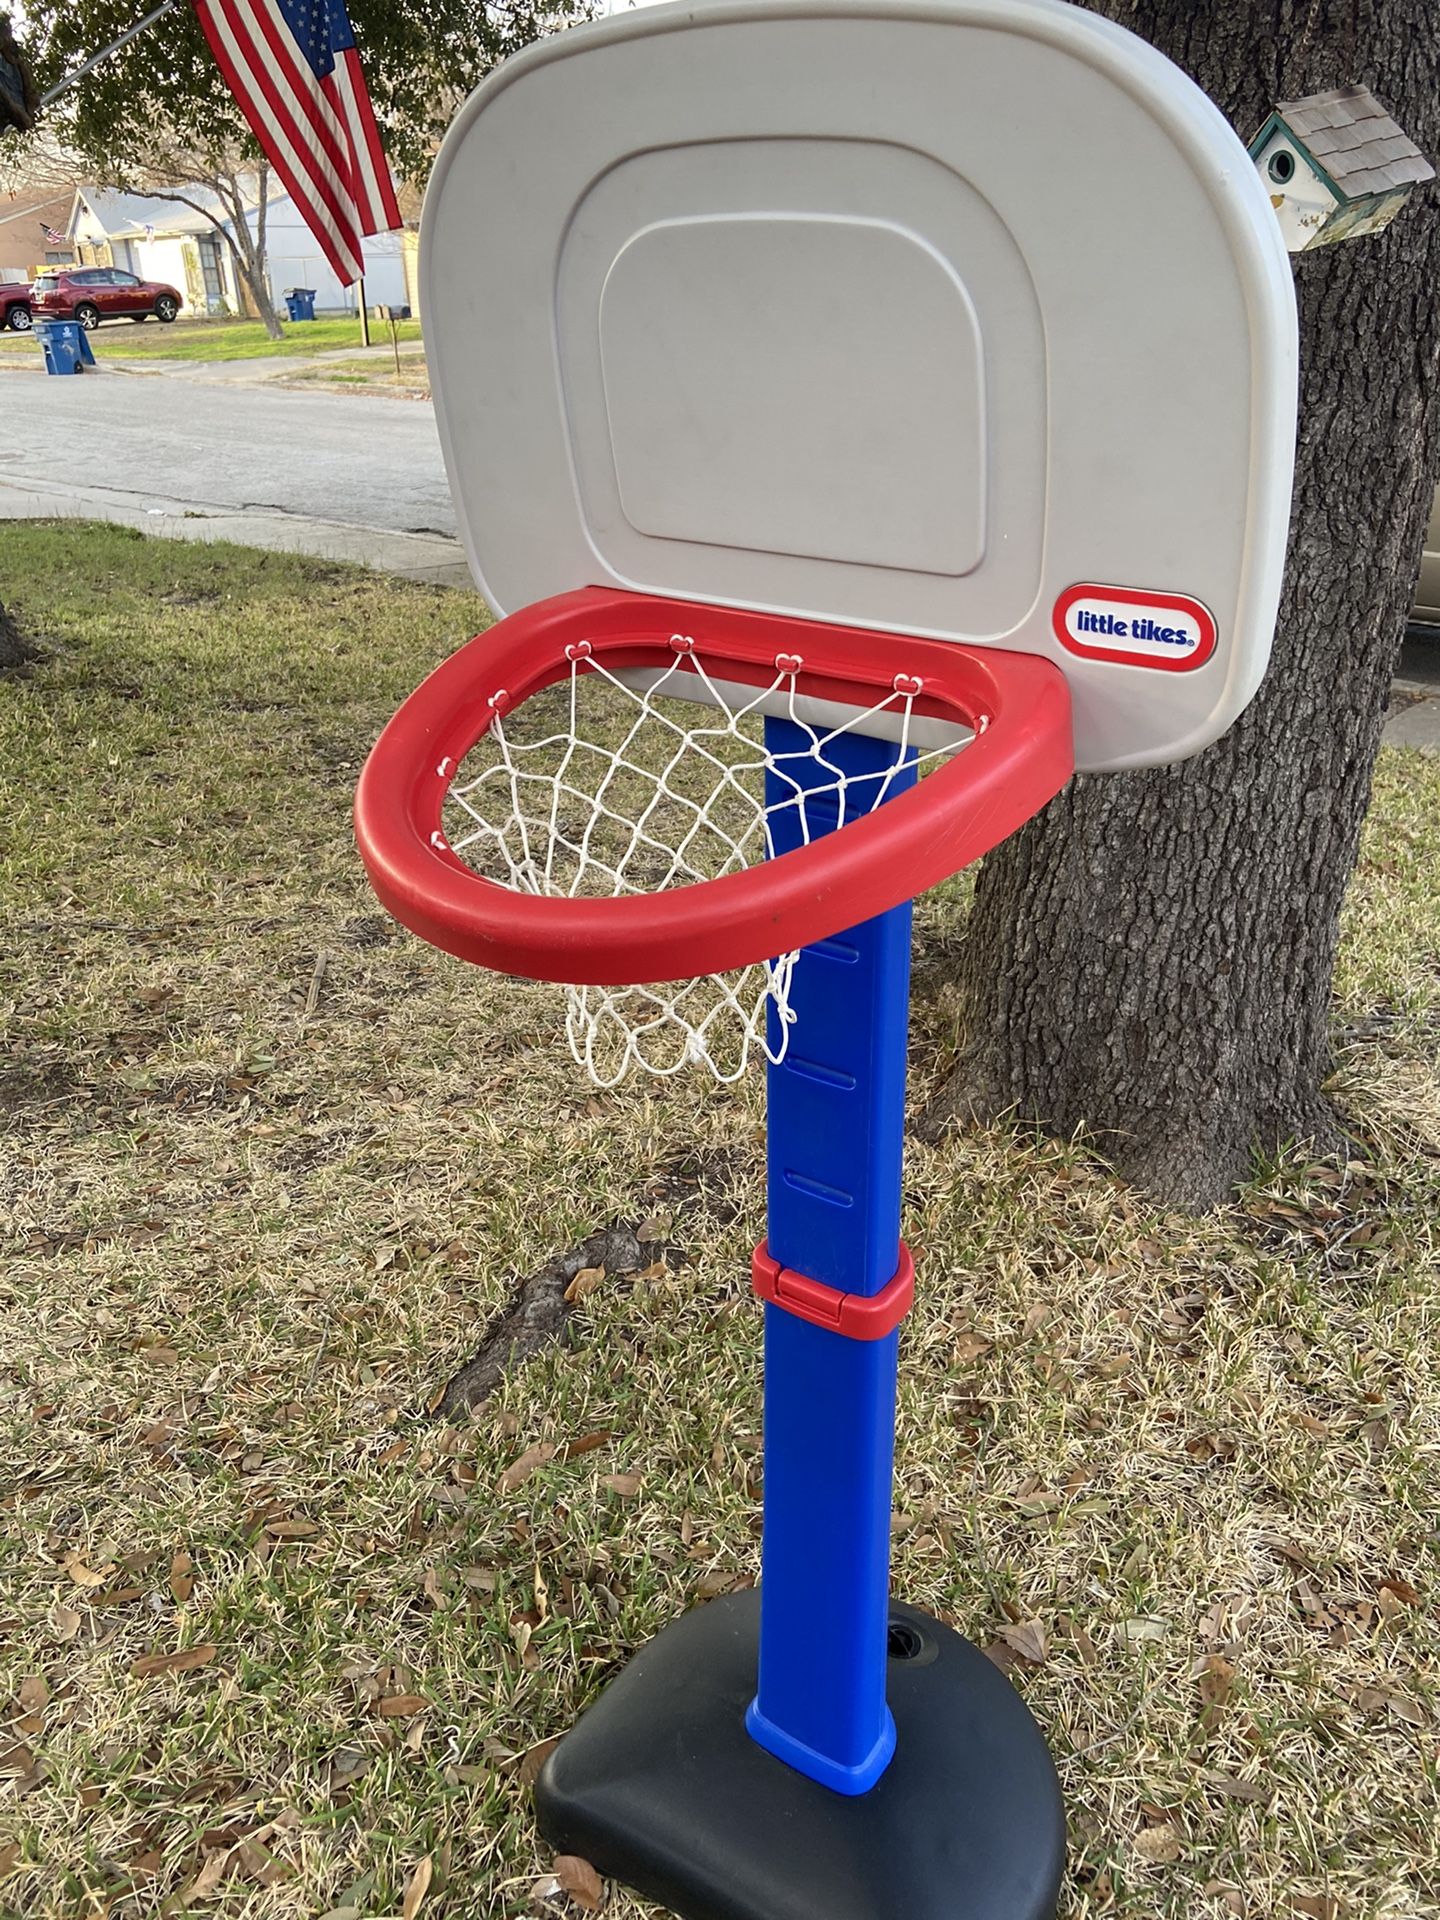 Little tikes Kids child basketball goal Portable Basketball Stand Set Goal Kids Hoop Toy Indoor Outdoor